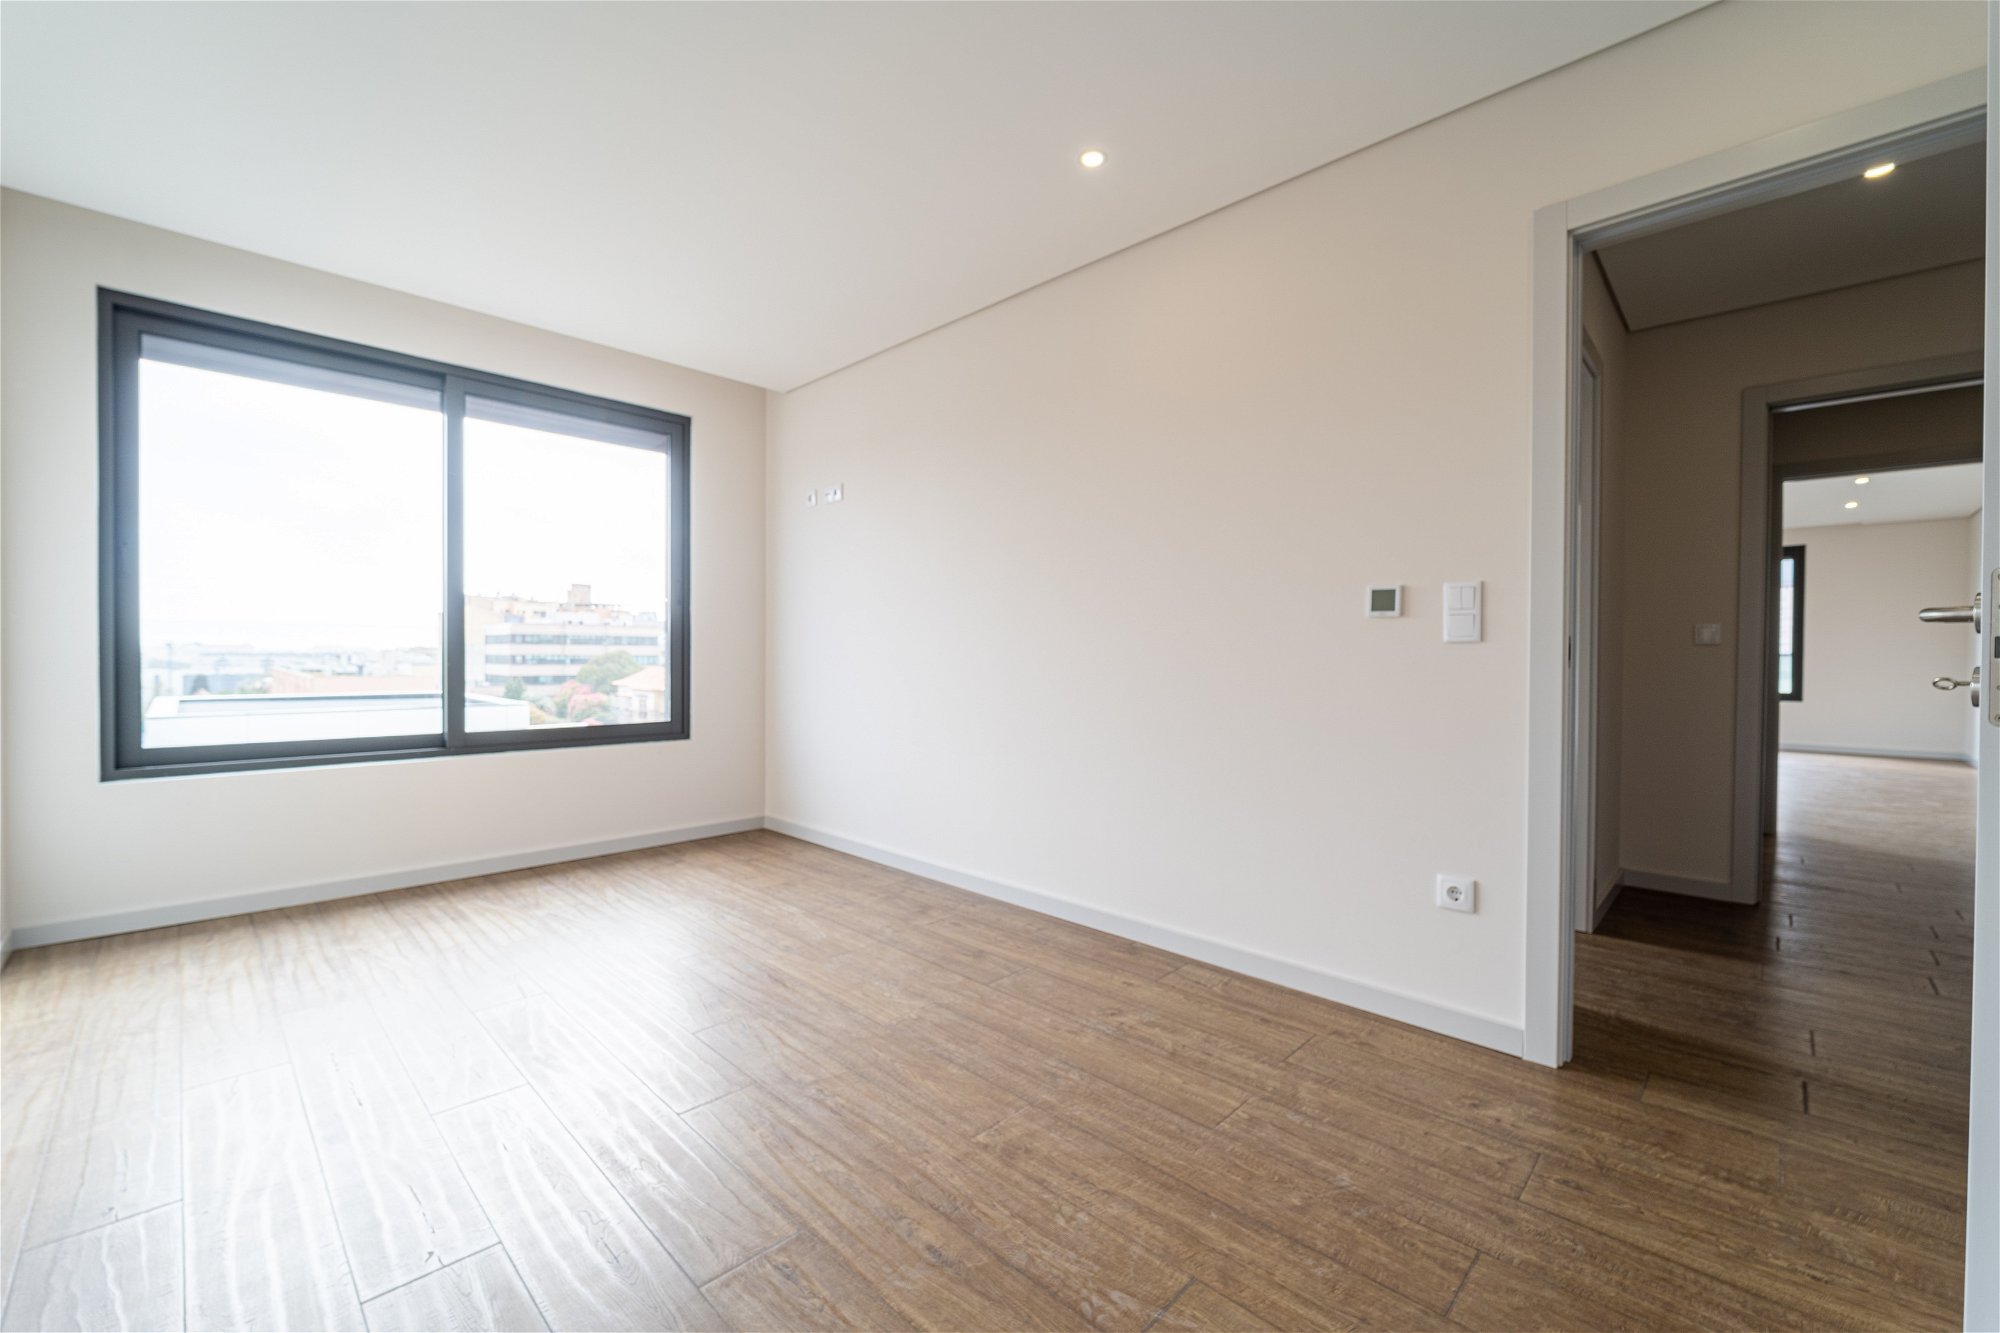 3 bedrooms apartment with balcony in Boavista, Porto 3509002335